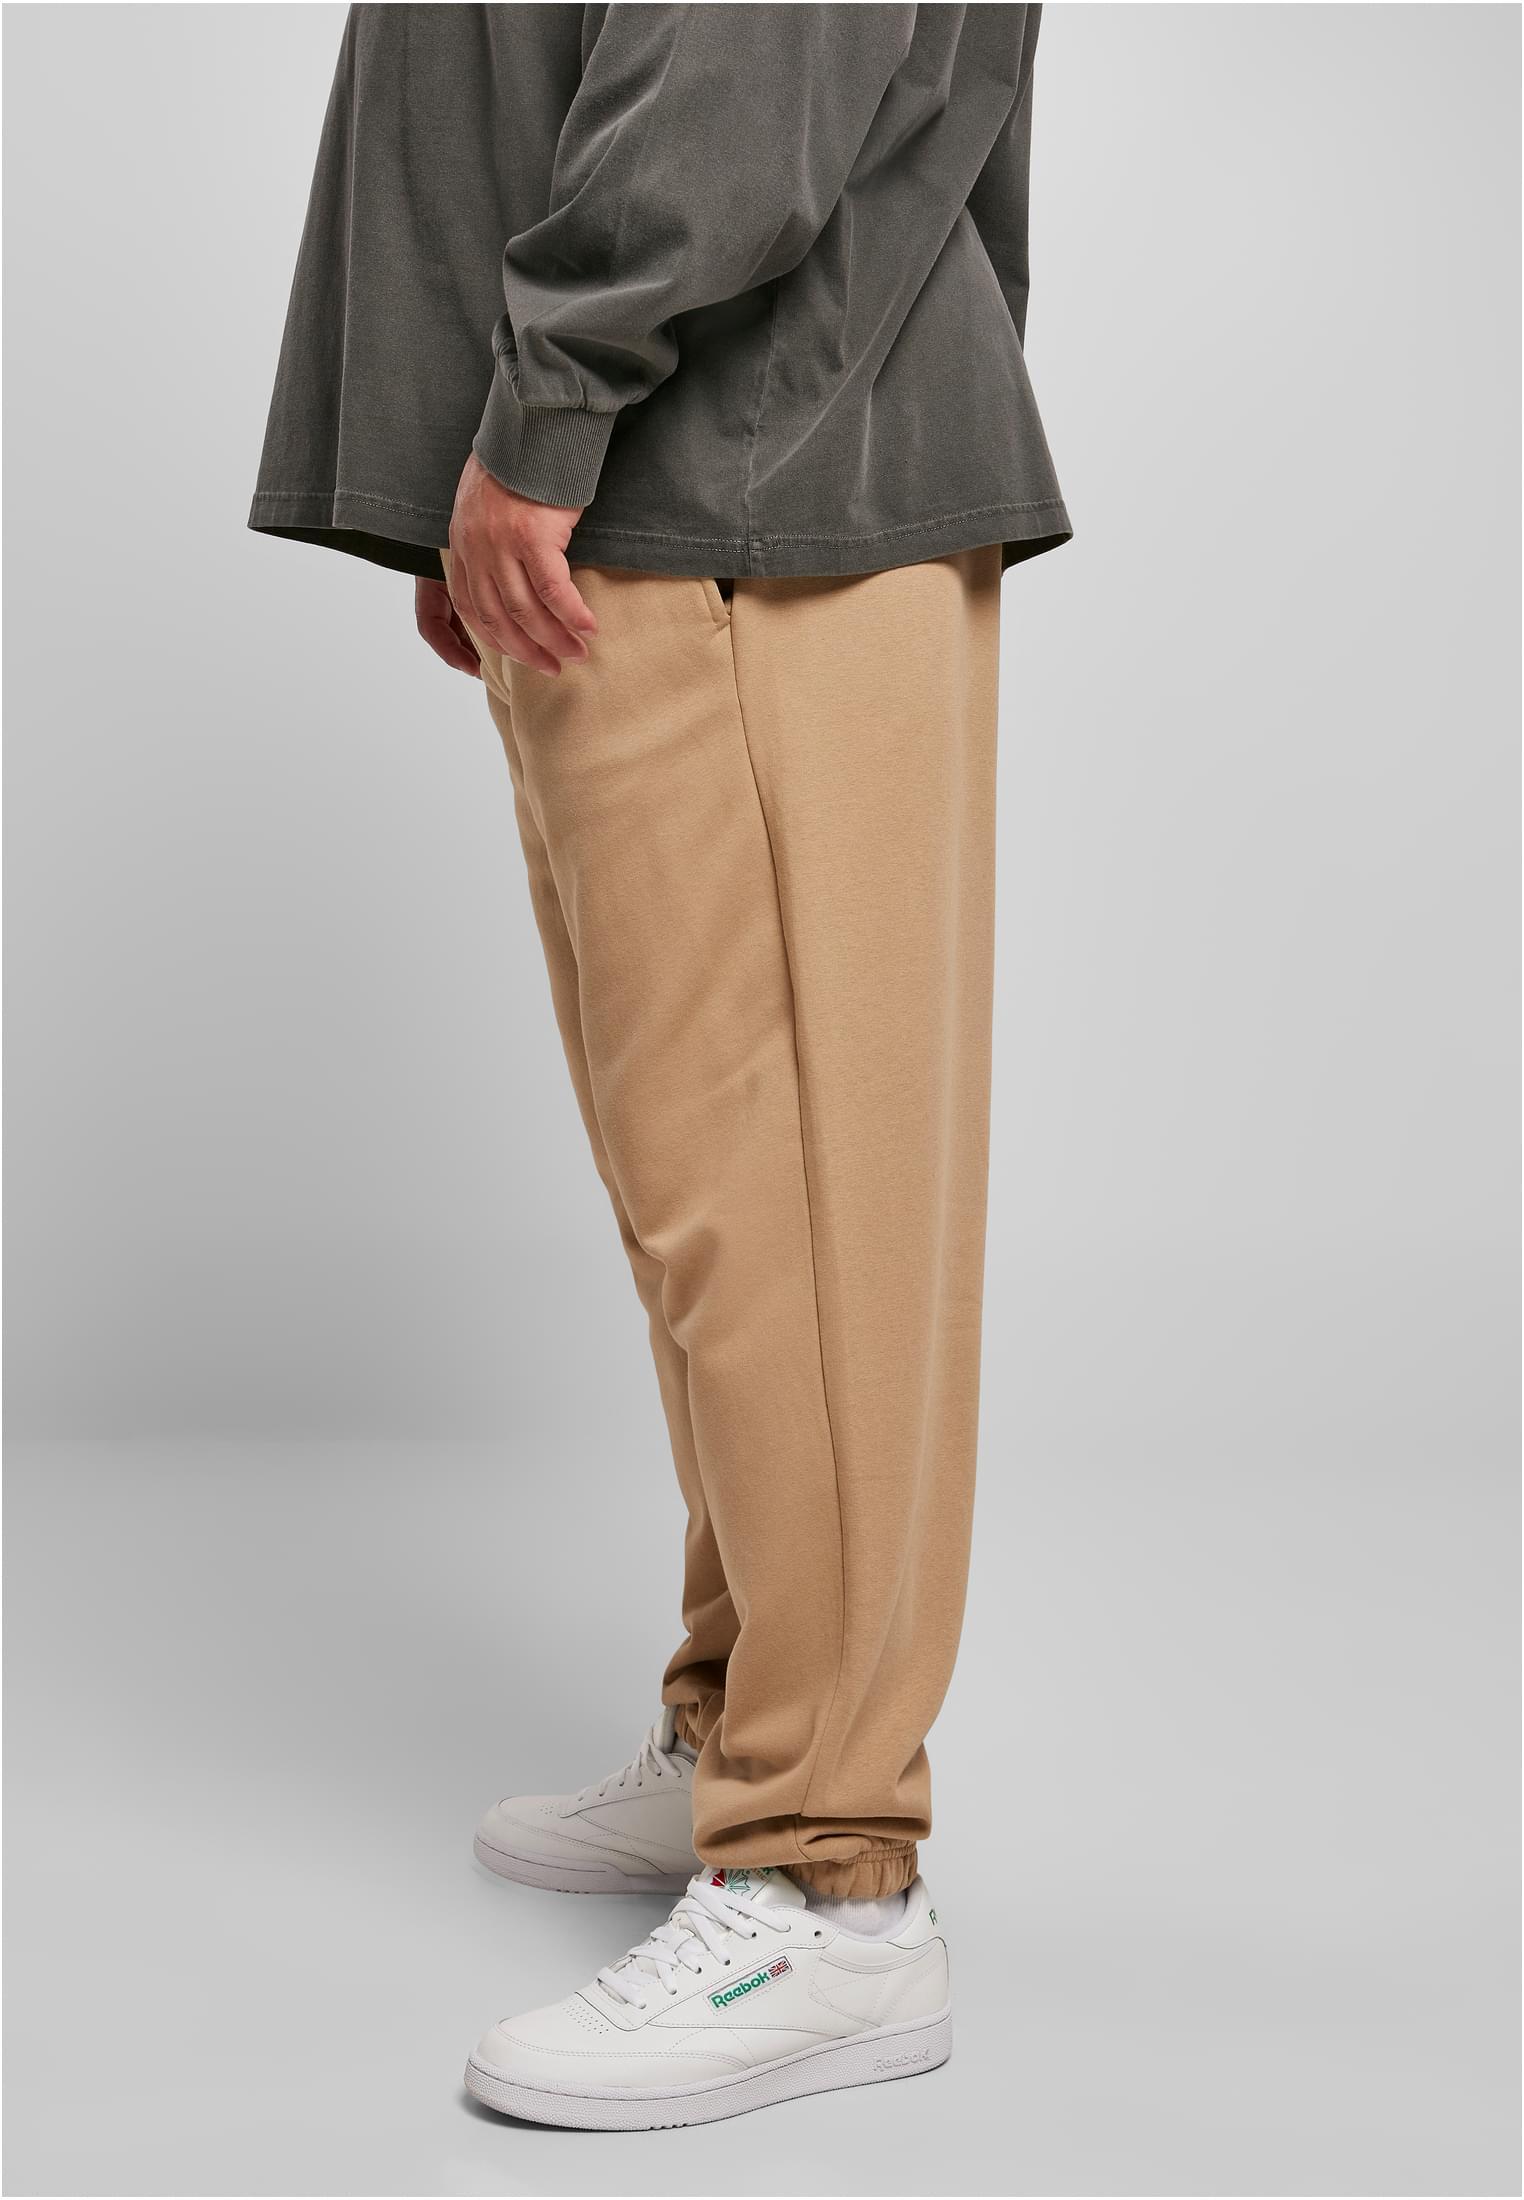 Urban Classics Plus Size Basic Sweatpants 2.0 (Farbe: warm sand / Größe: 3XL)